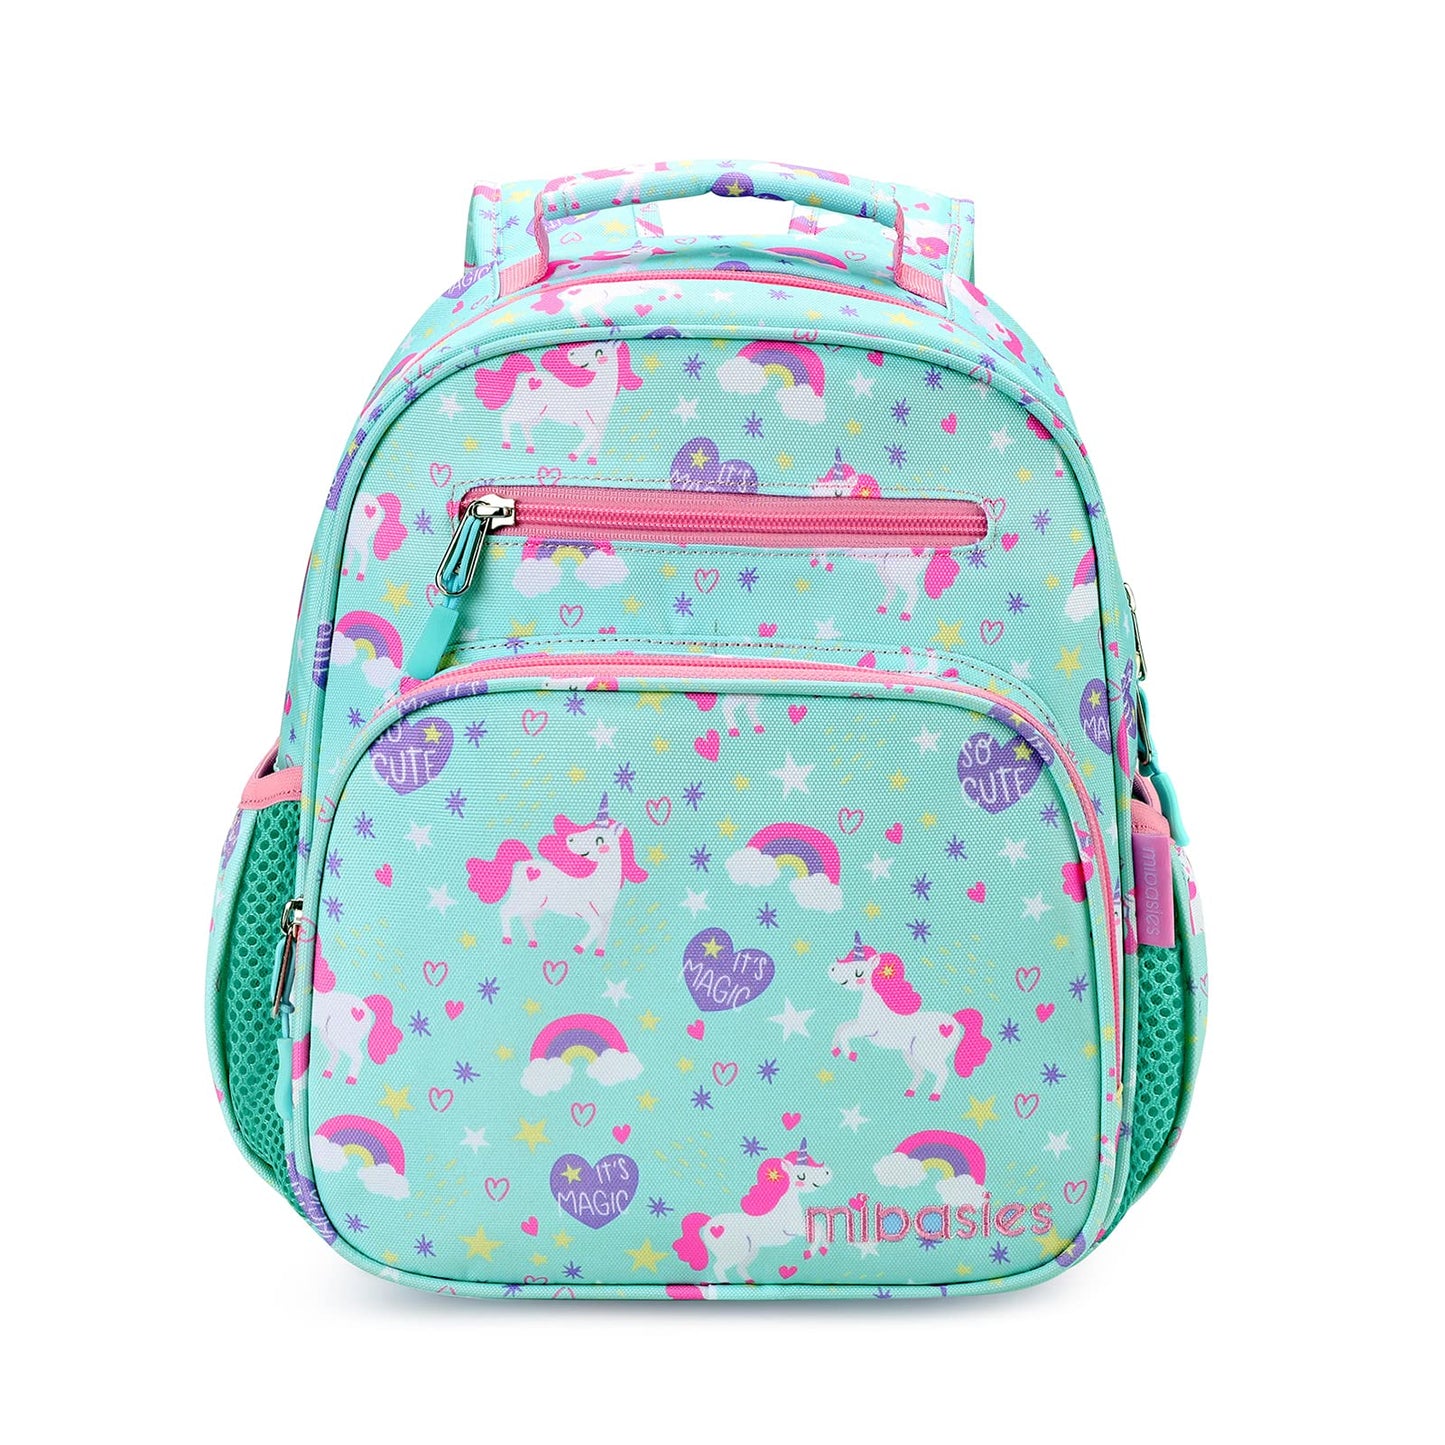 FUN FOR SPRING schoolbag Mibasies 9L Magical Unicorn 